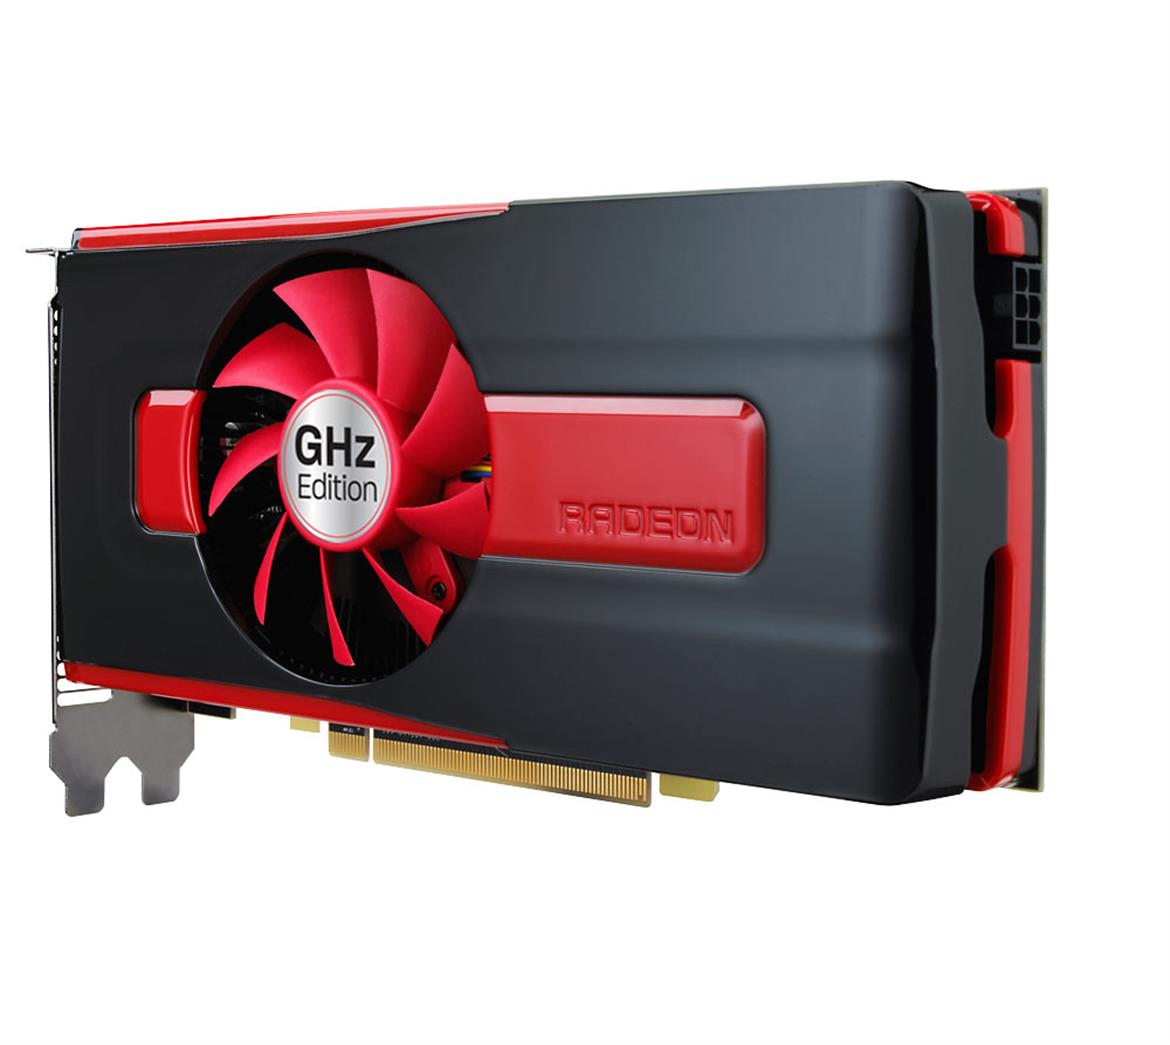 AMD Radeon HD 7770 and 7750 GPU Reviews